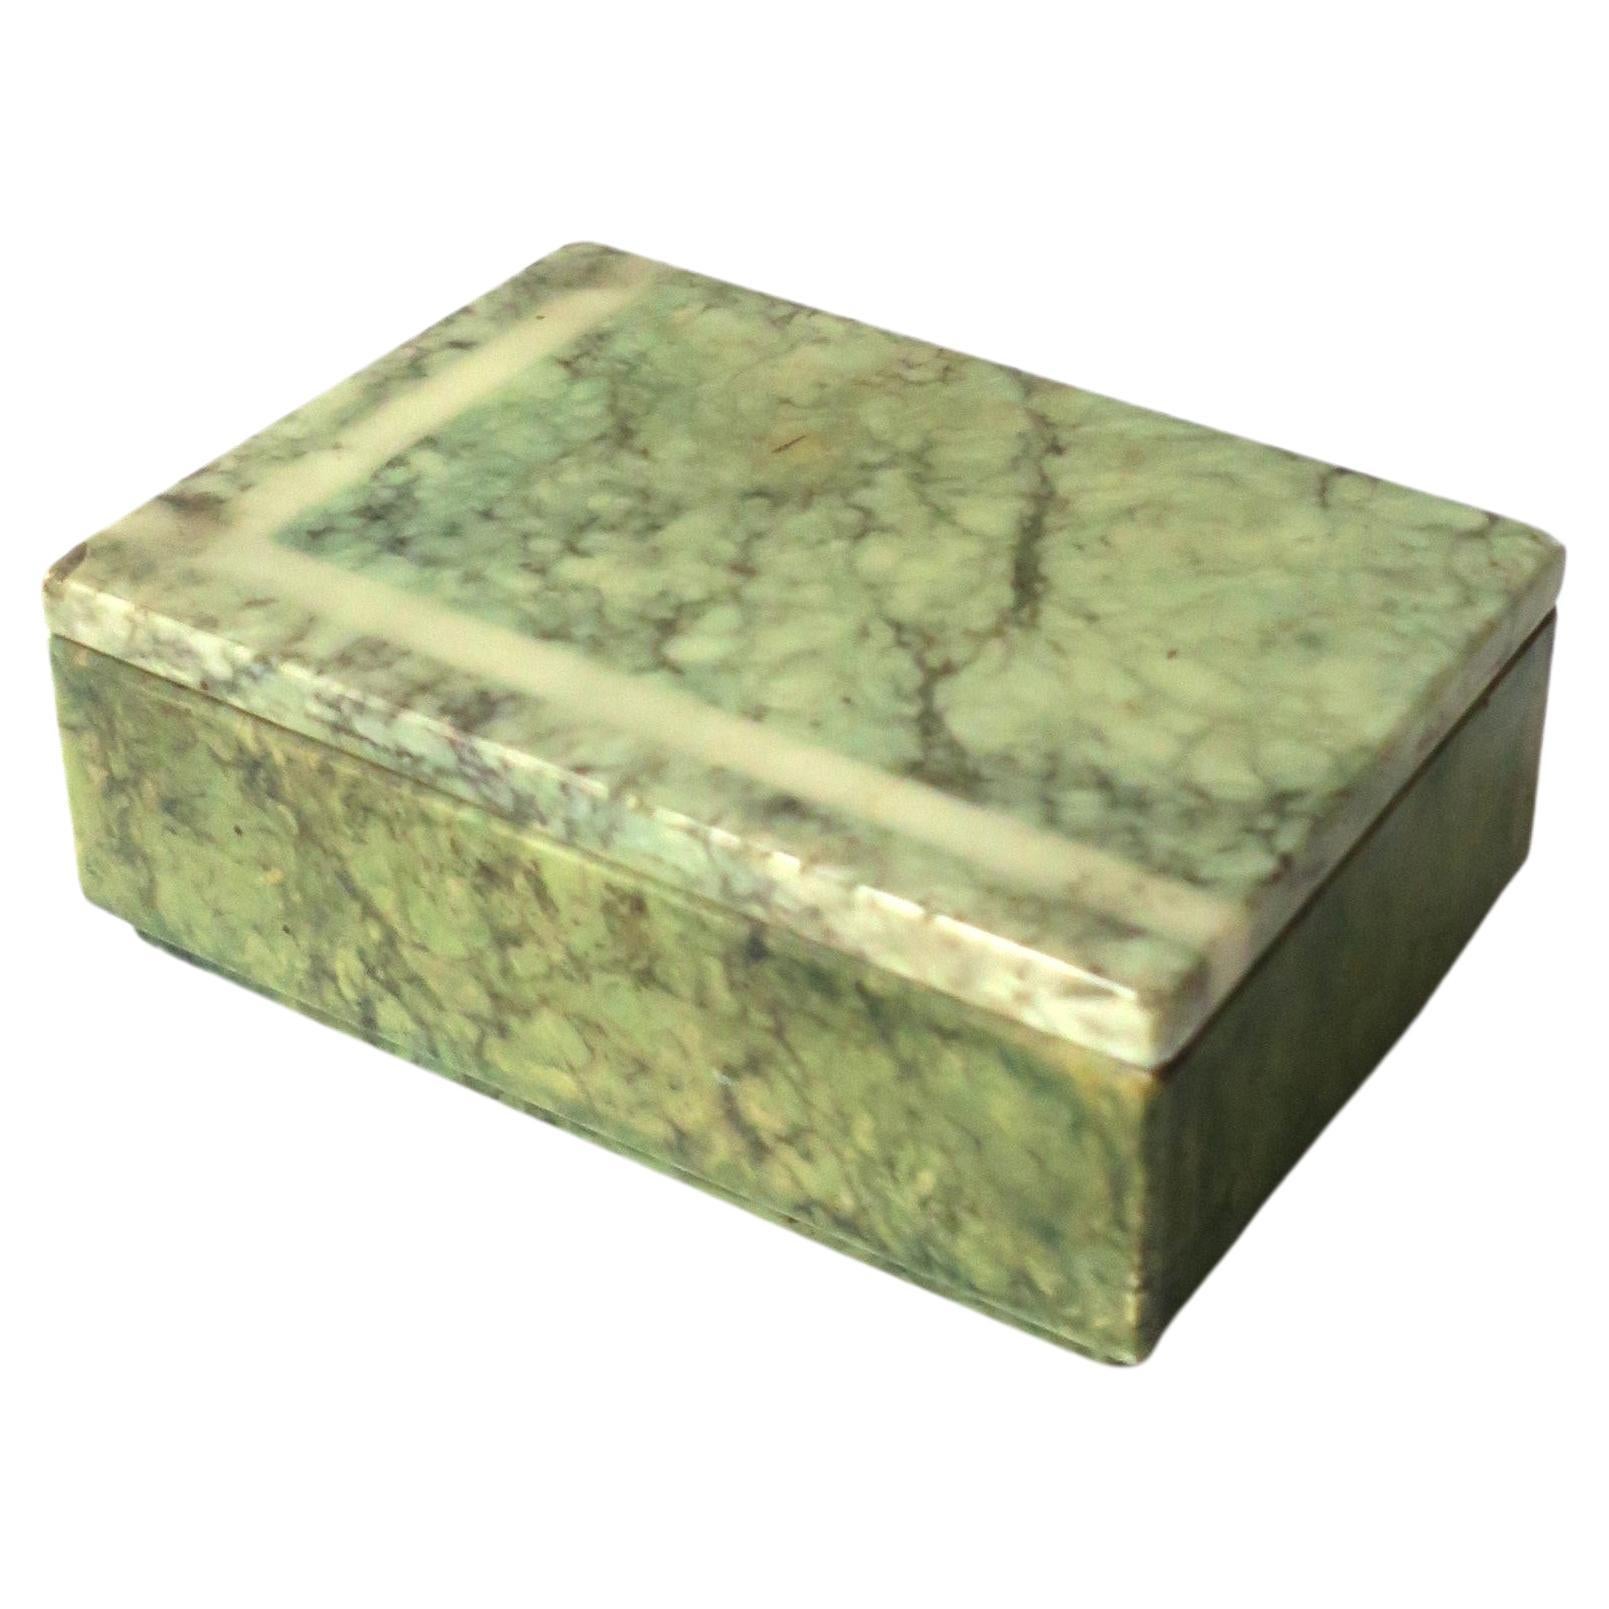 green marble box